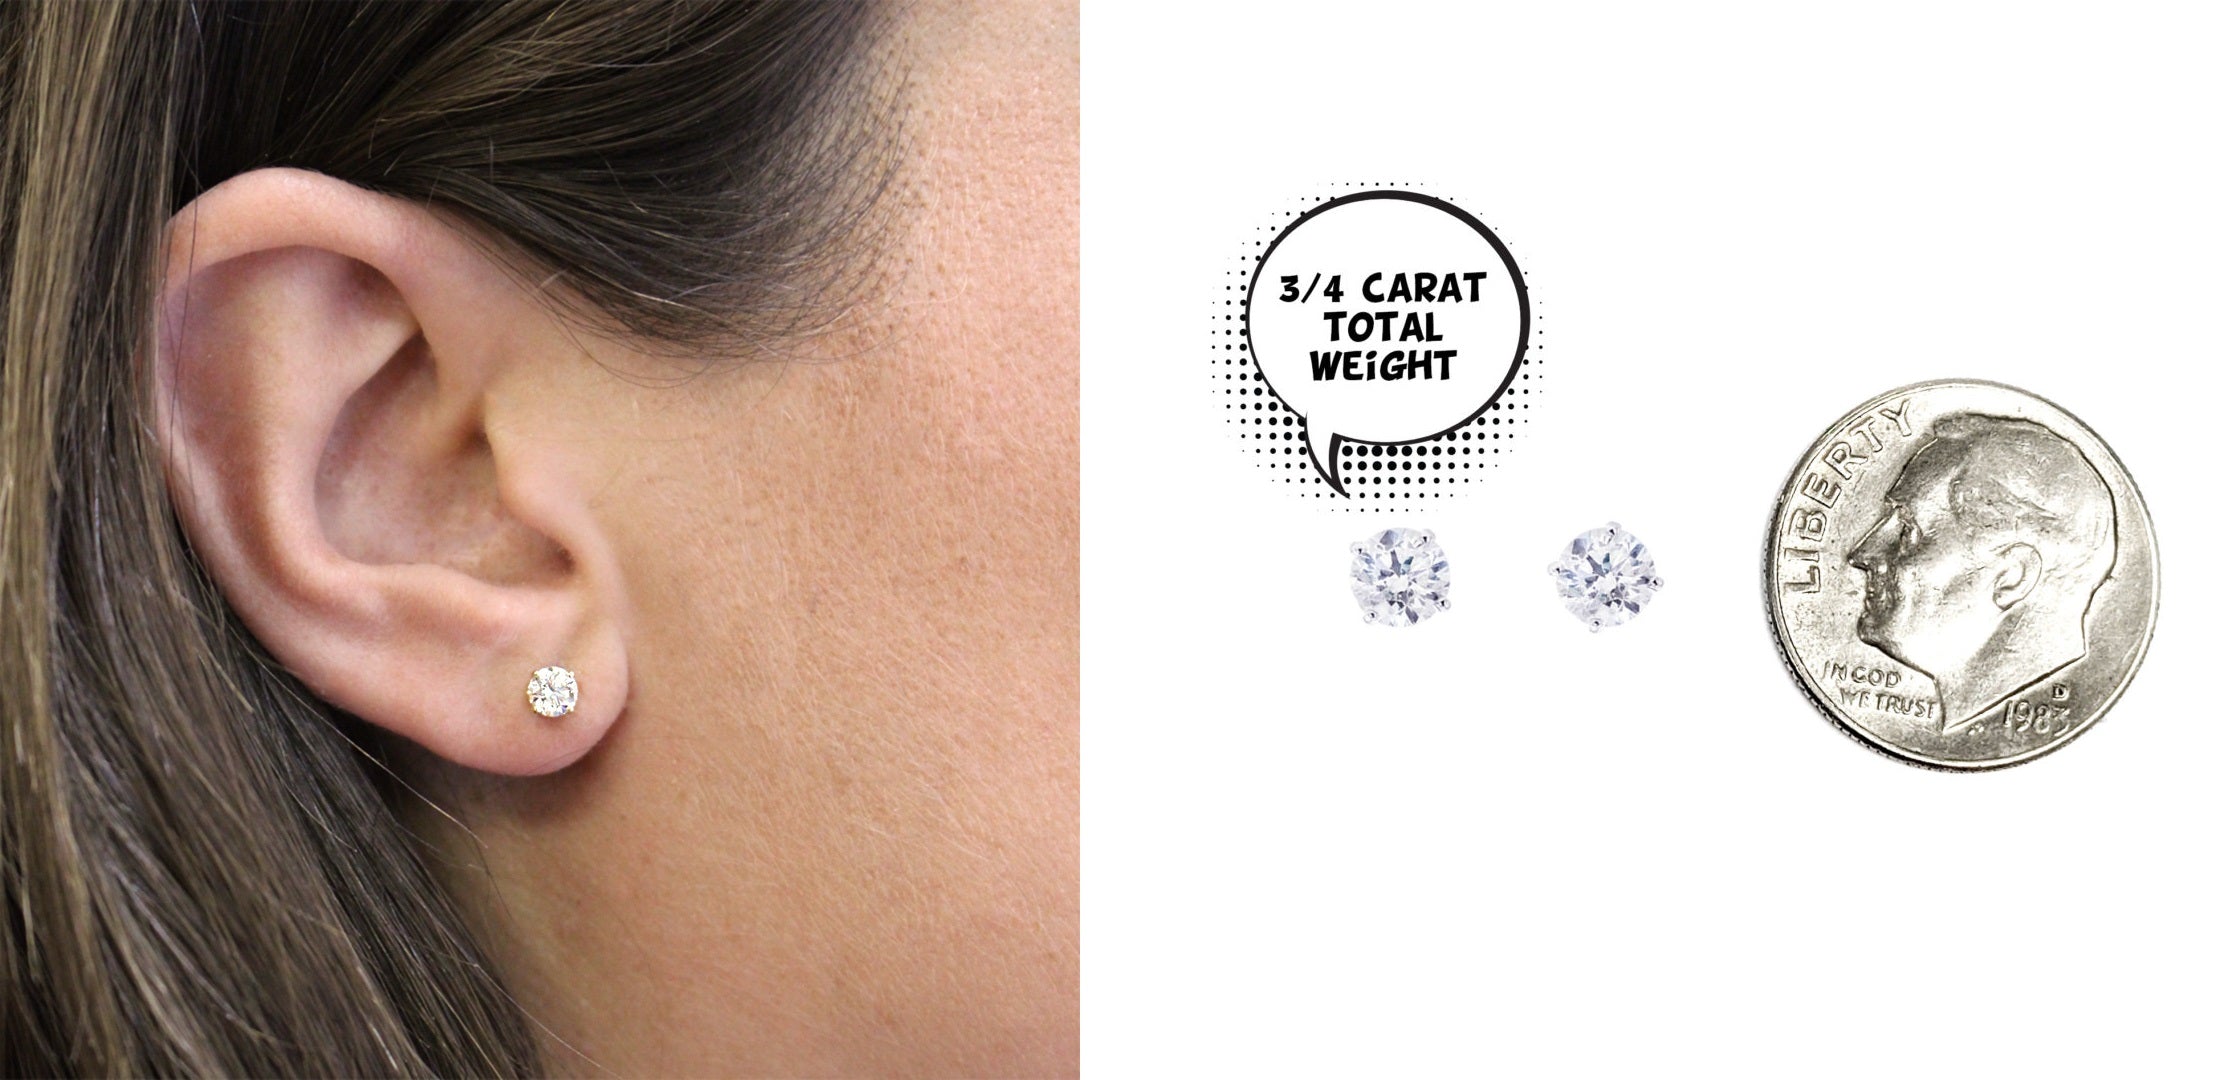 3/4 carat diamond studs compared to ear.